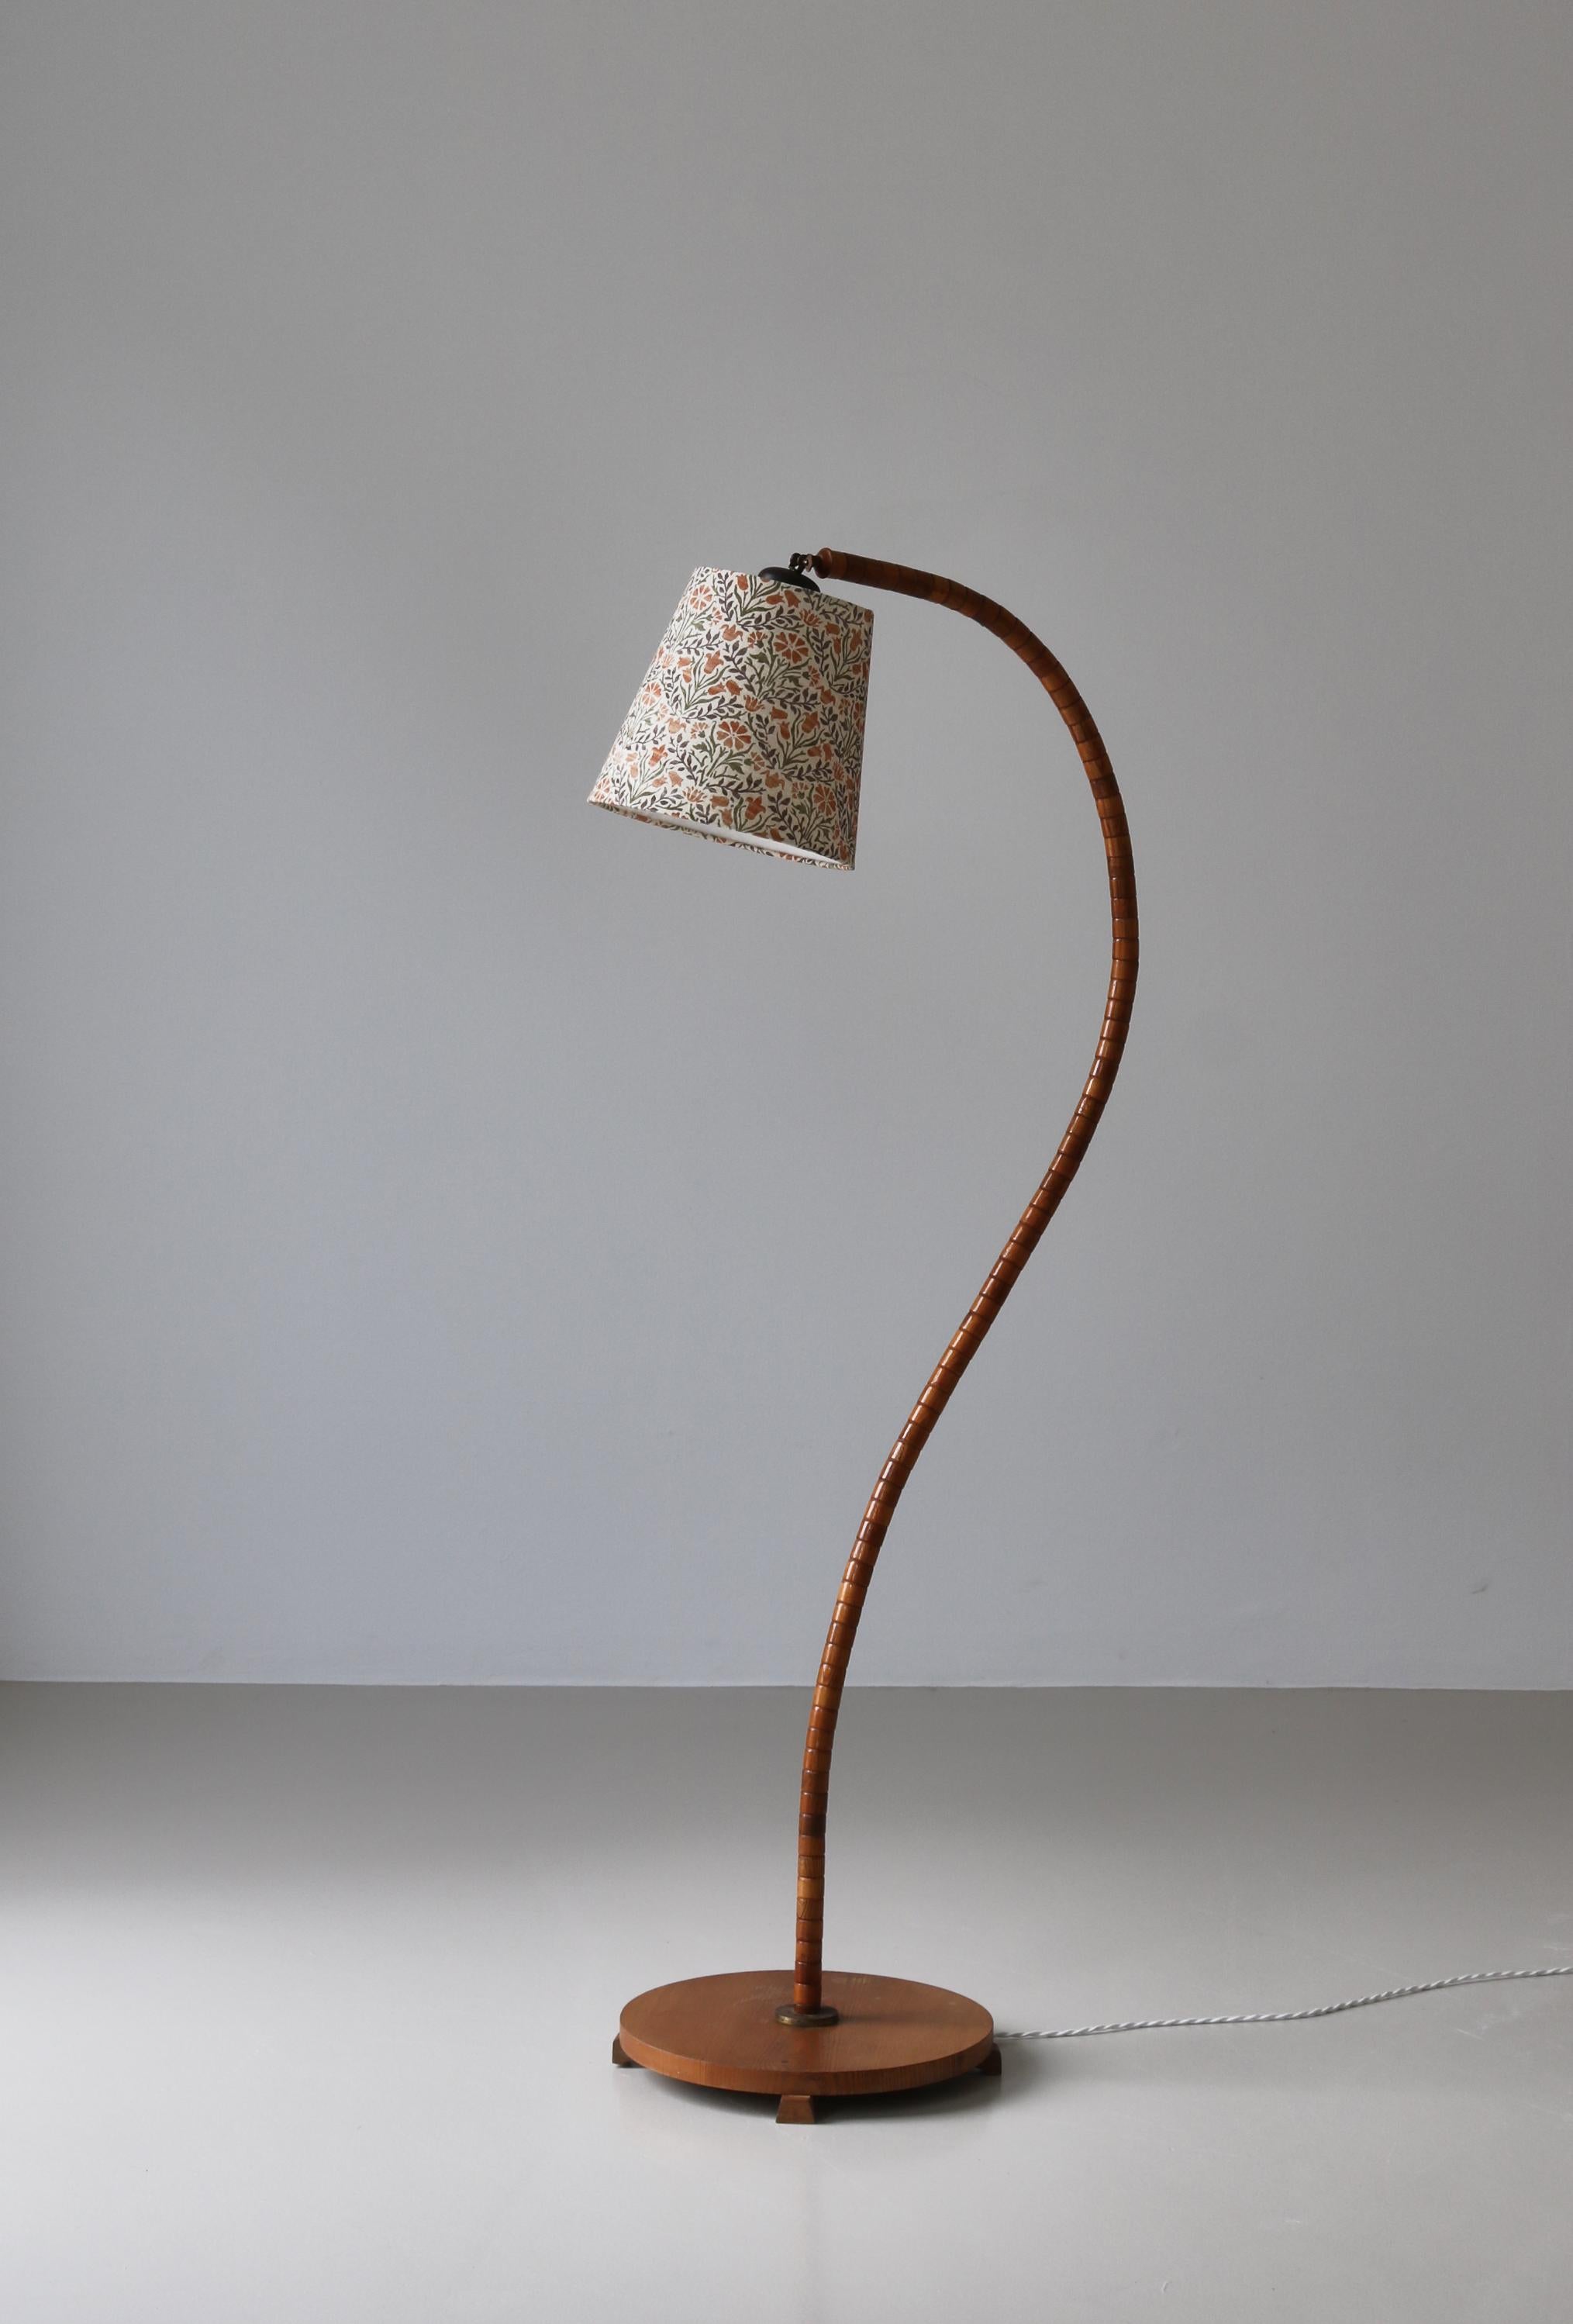 Swedish 1930s Art Deco Floor Lamp in Patinated Elm & William Morris Shade For Sale 2